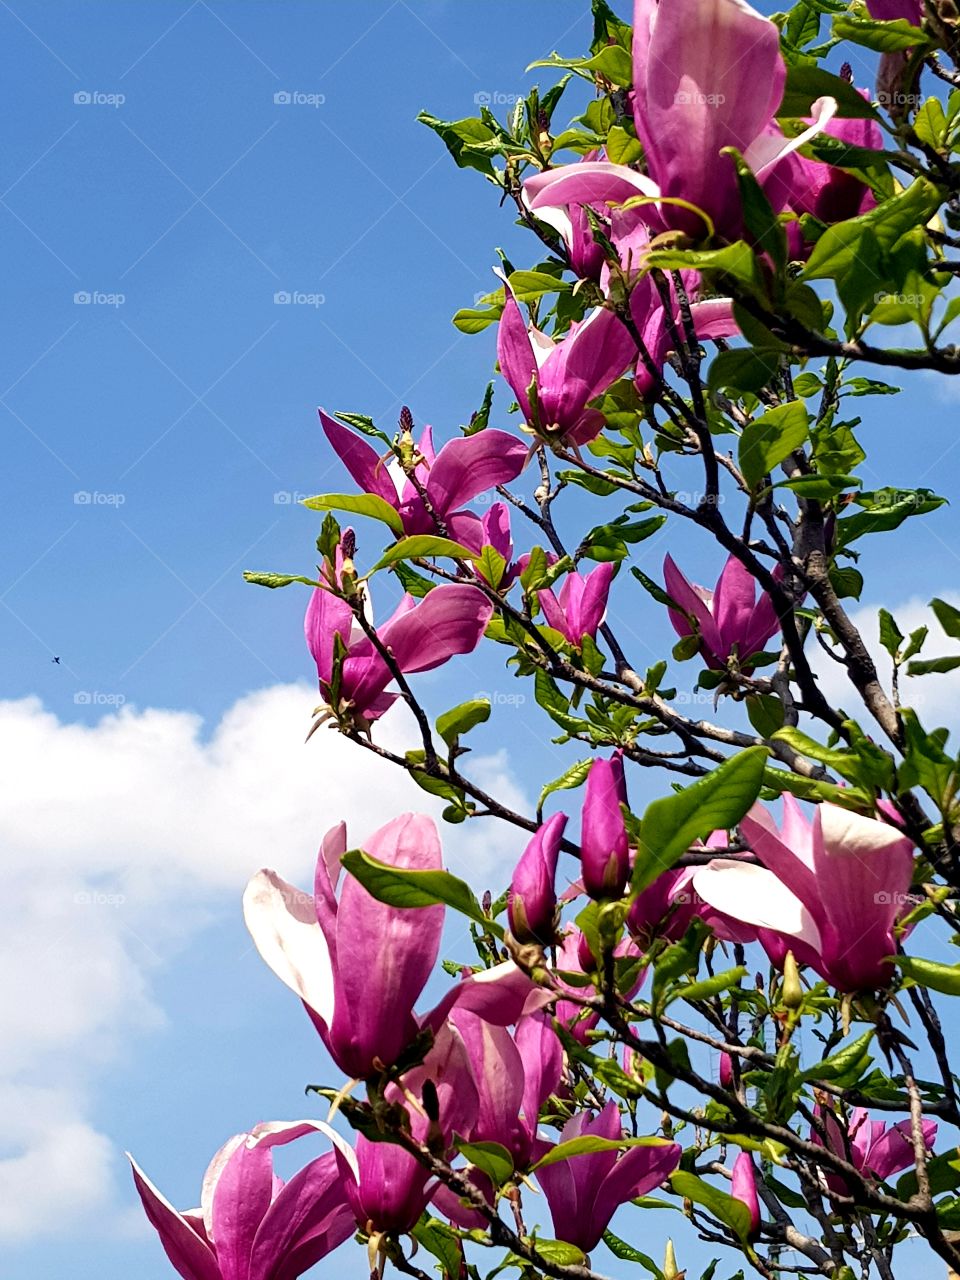 flower magnolija